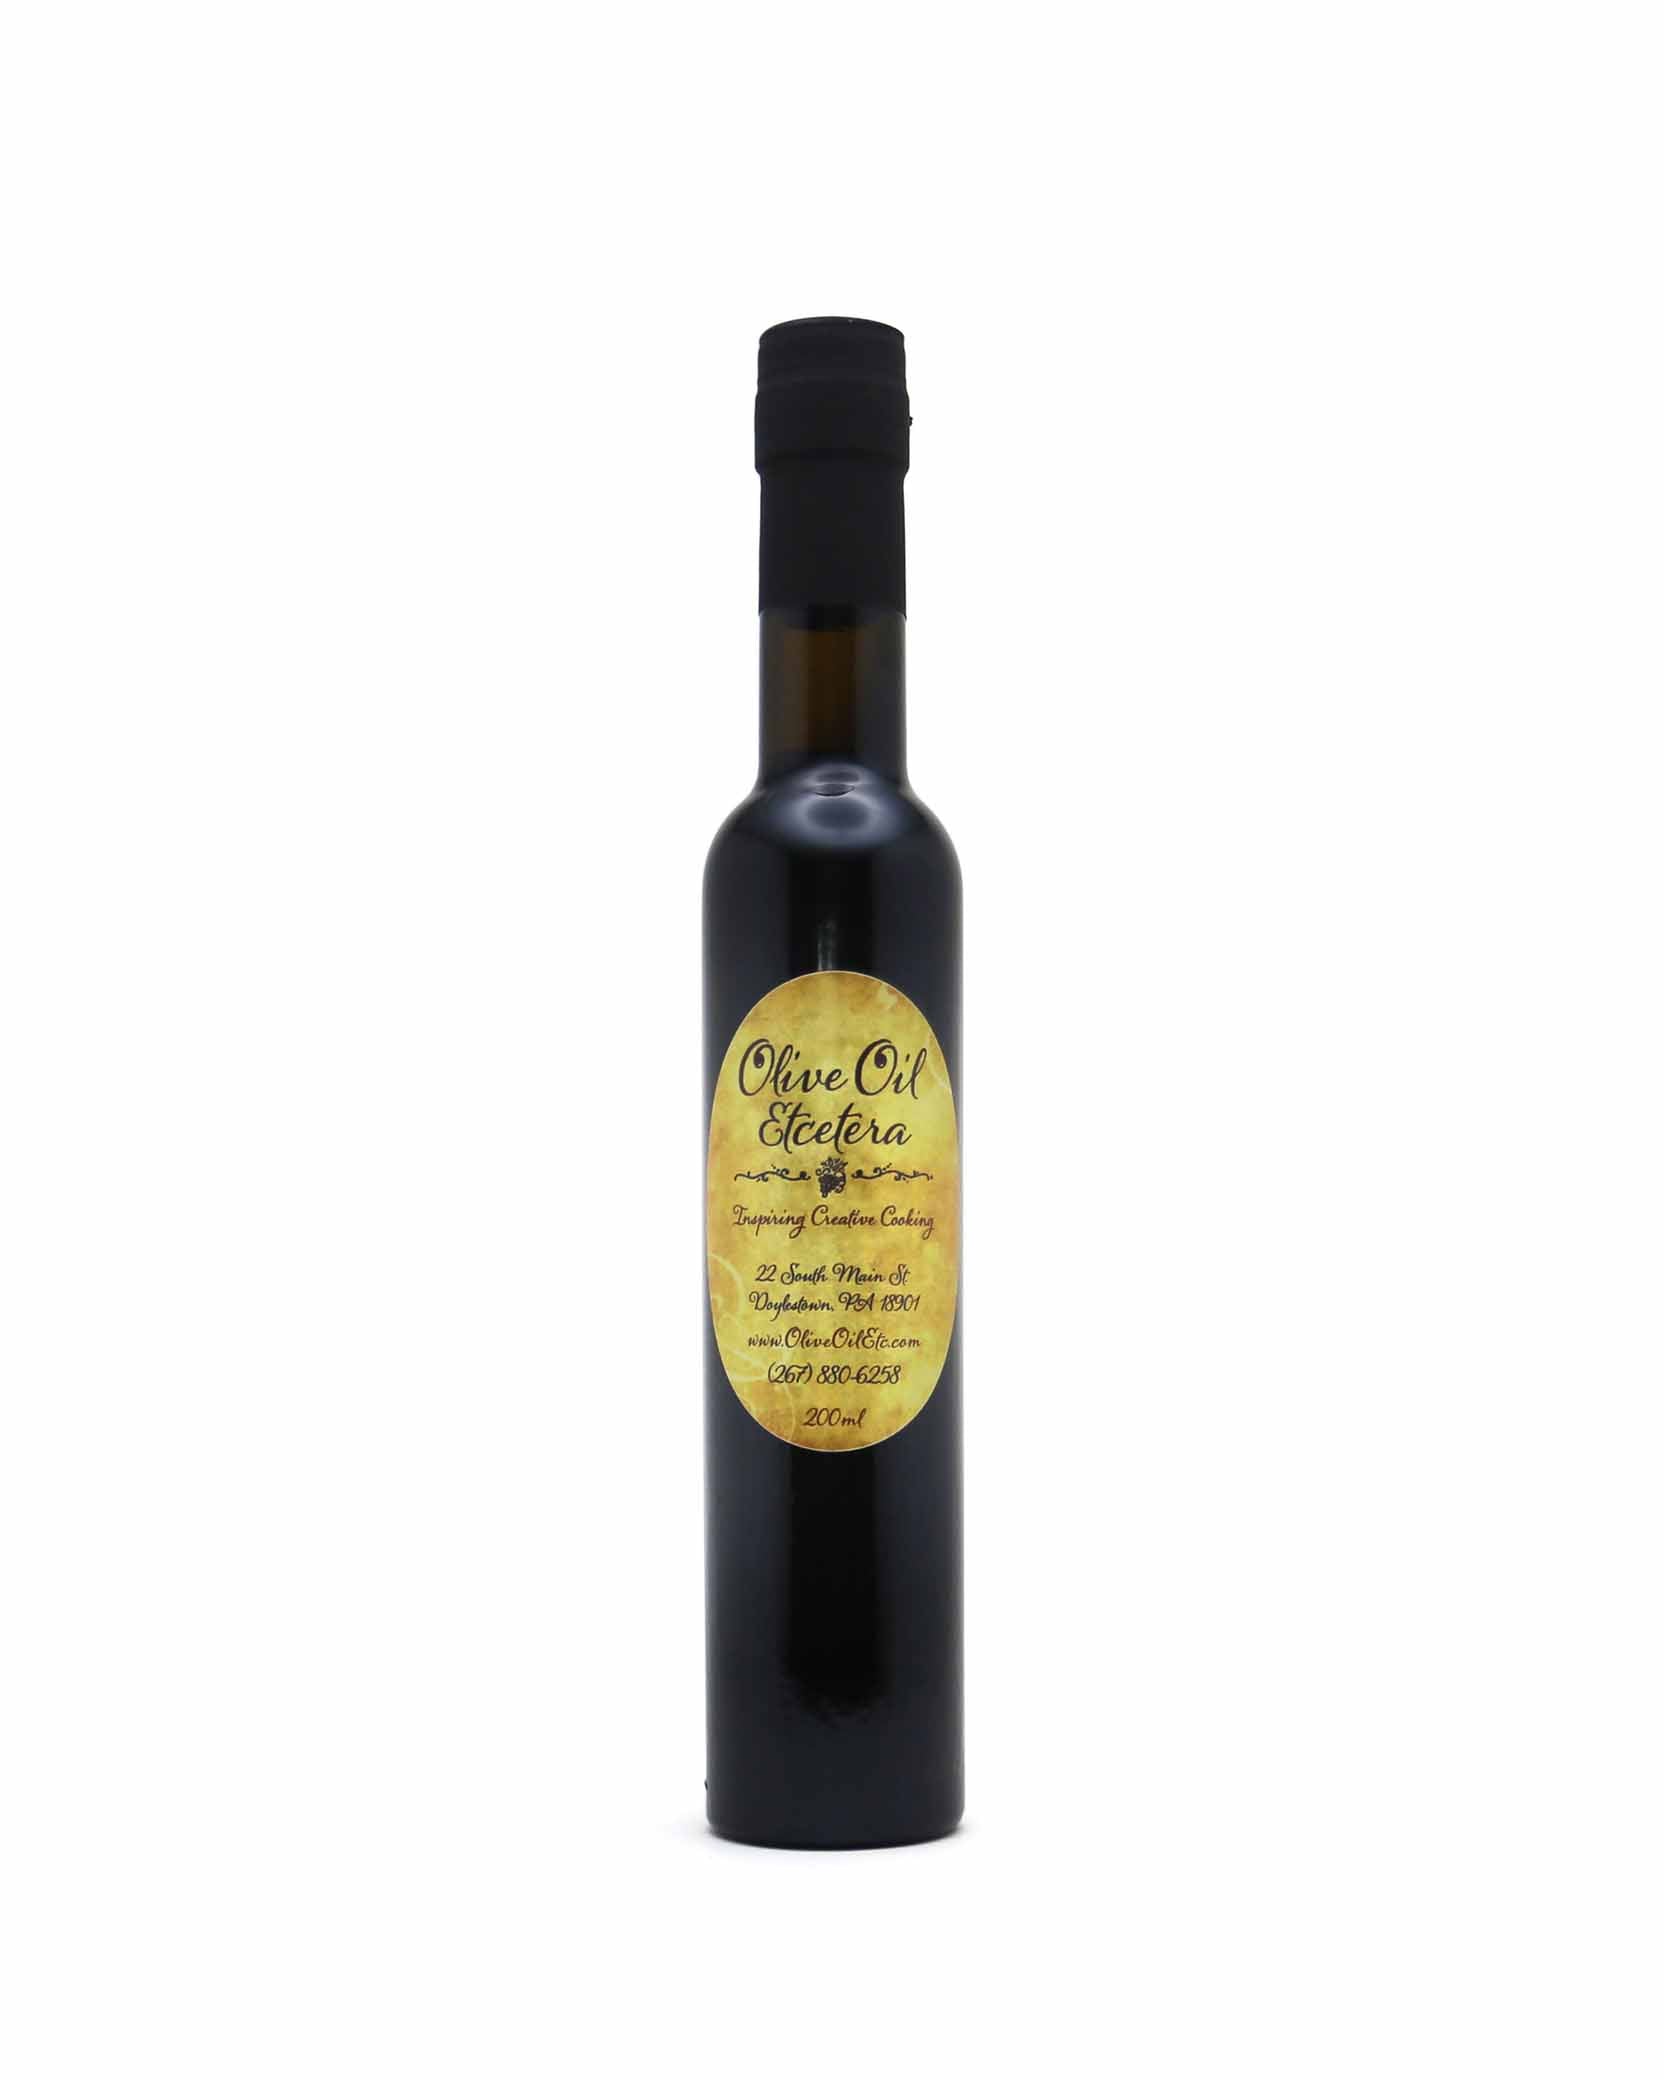 Oregano olive oil in a 200 ml bottle from Olive Oil Etcetera in Doylestown 